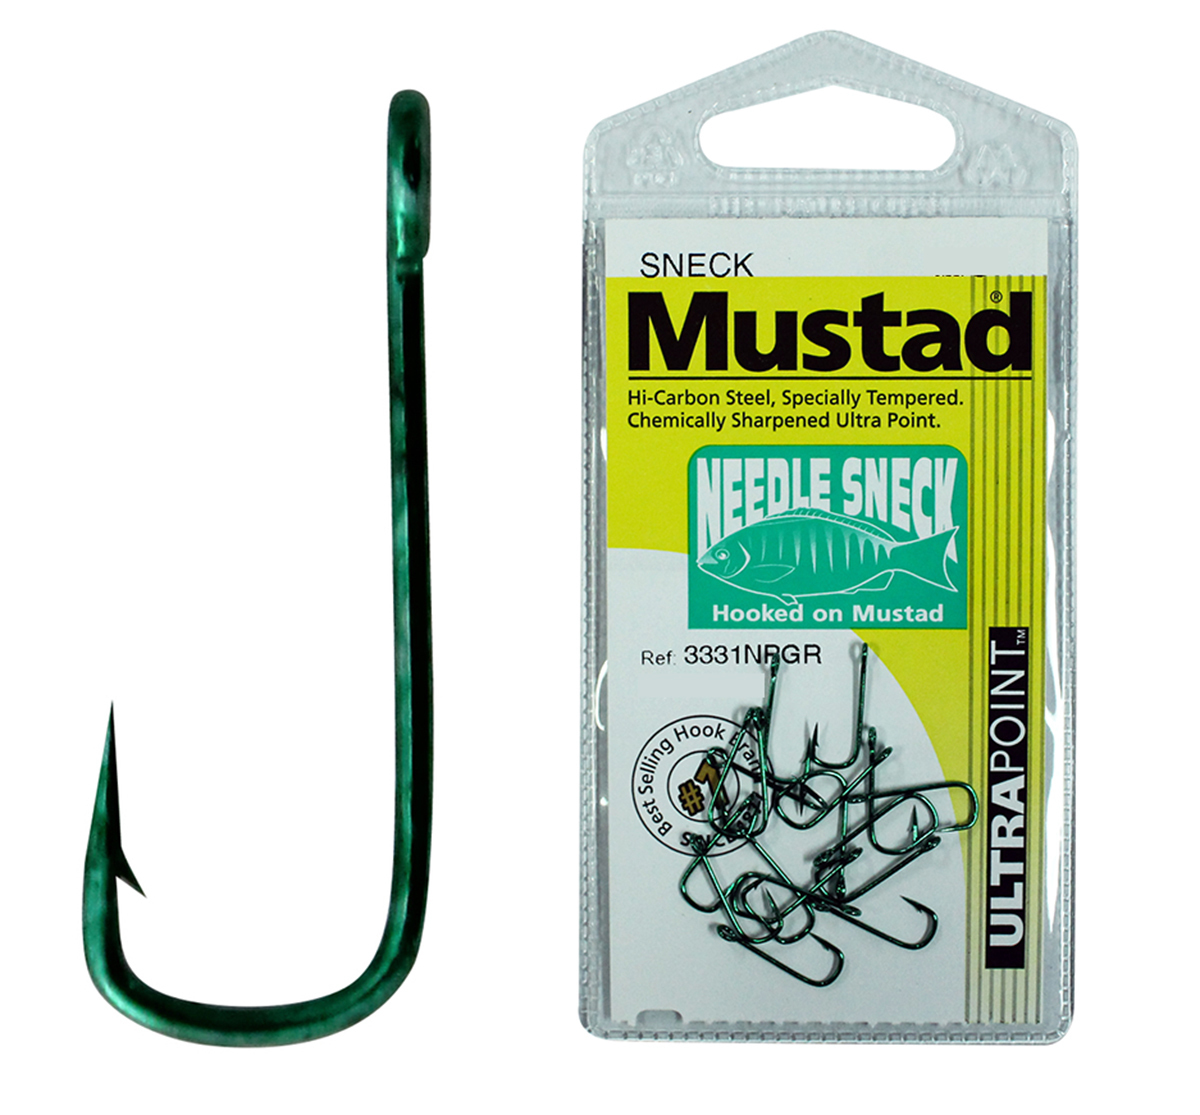 1 Packet of Mustad 37753NPNP Big Mouth Chemically Sharp Fishing Hooks